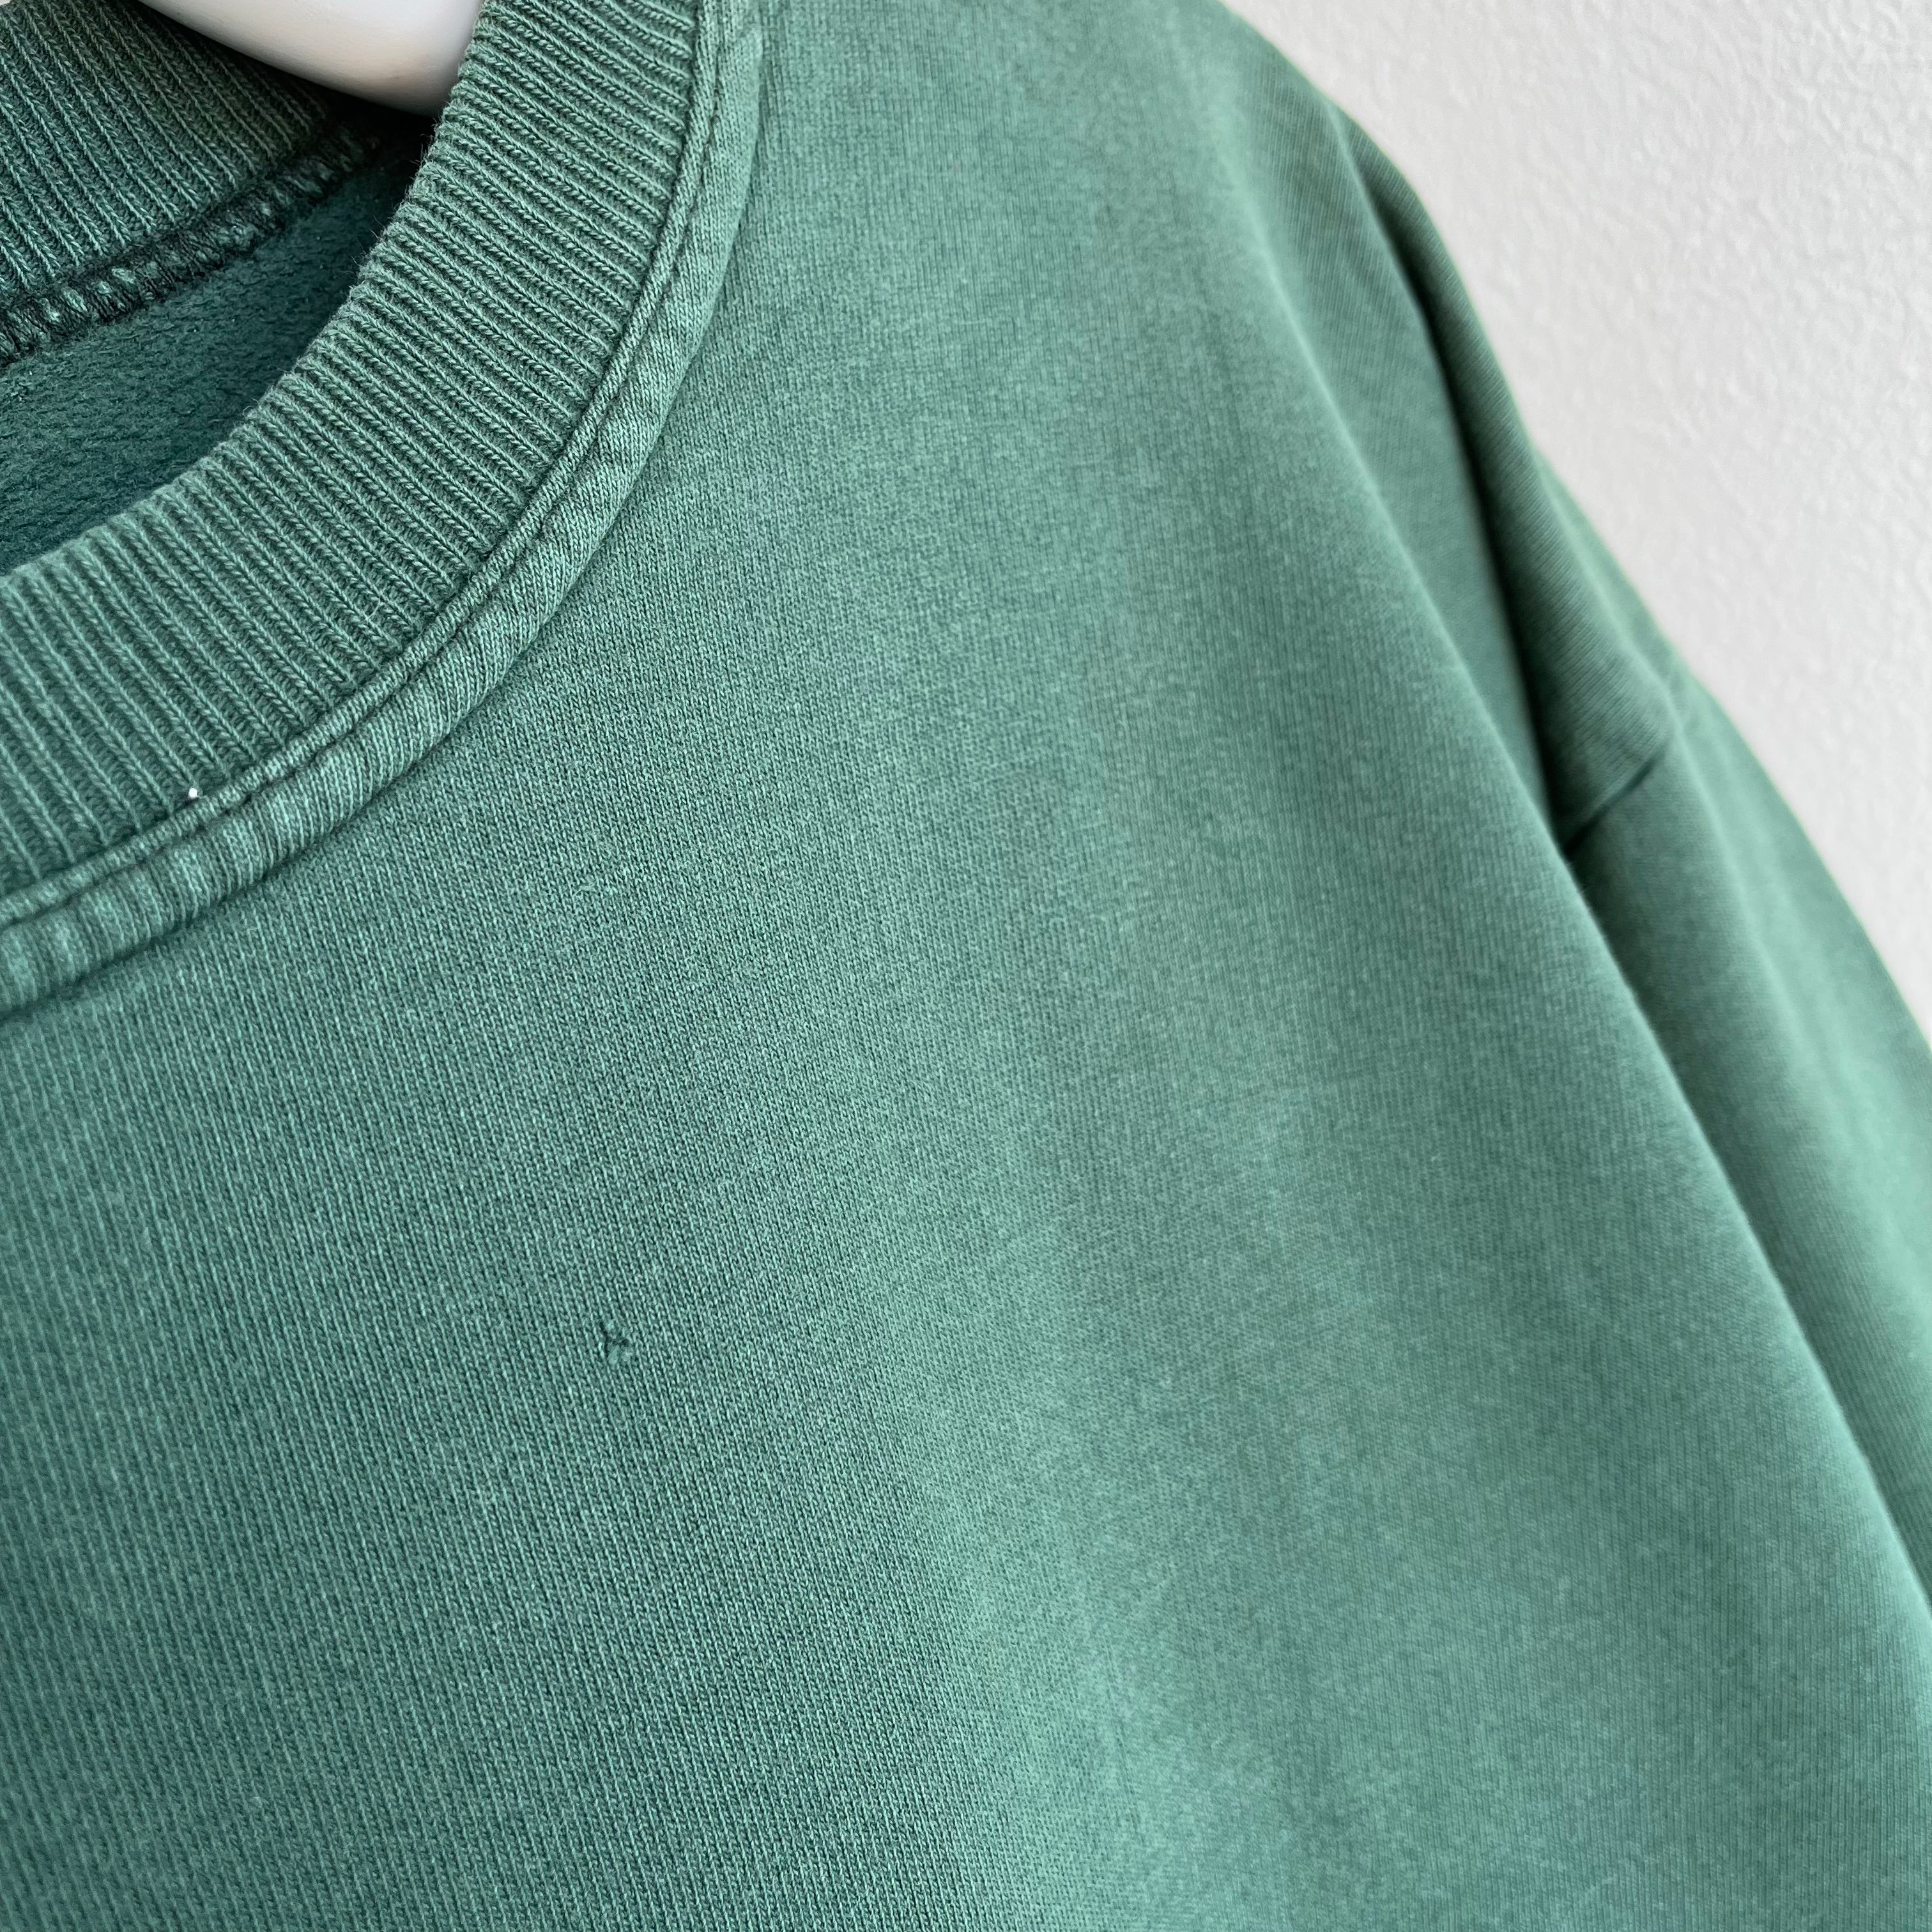 1980/90s Bongo Long Sleeve Green T-Shirt - Who Remembers??